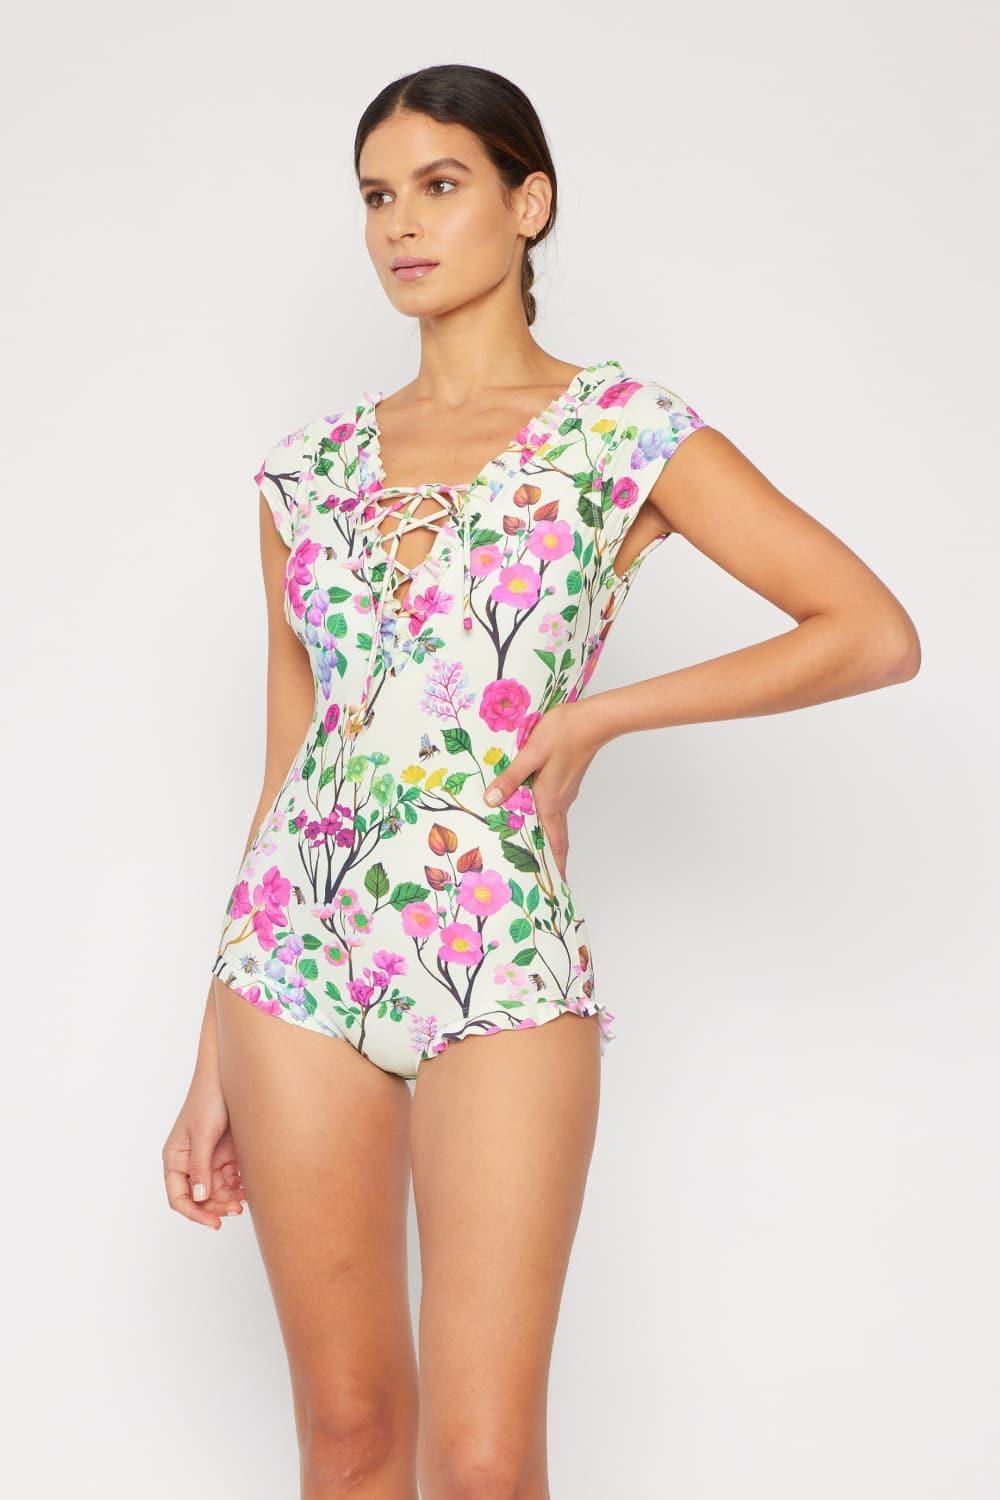 Marina West Swim Bring Me Flowers V-Neck One Piece Swimsuit Cherry Blossom Cream - SwagglyLife Home & Fashion